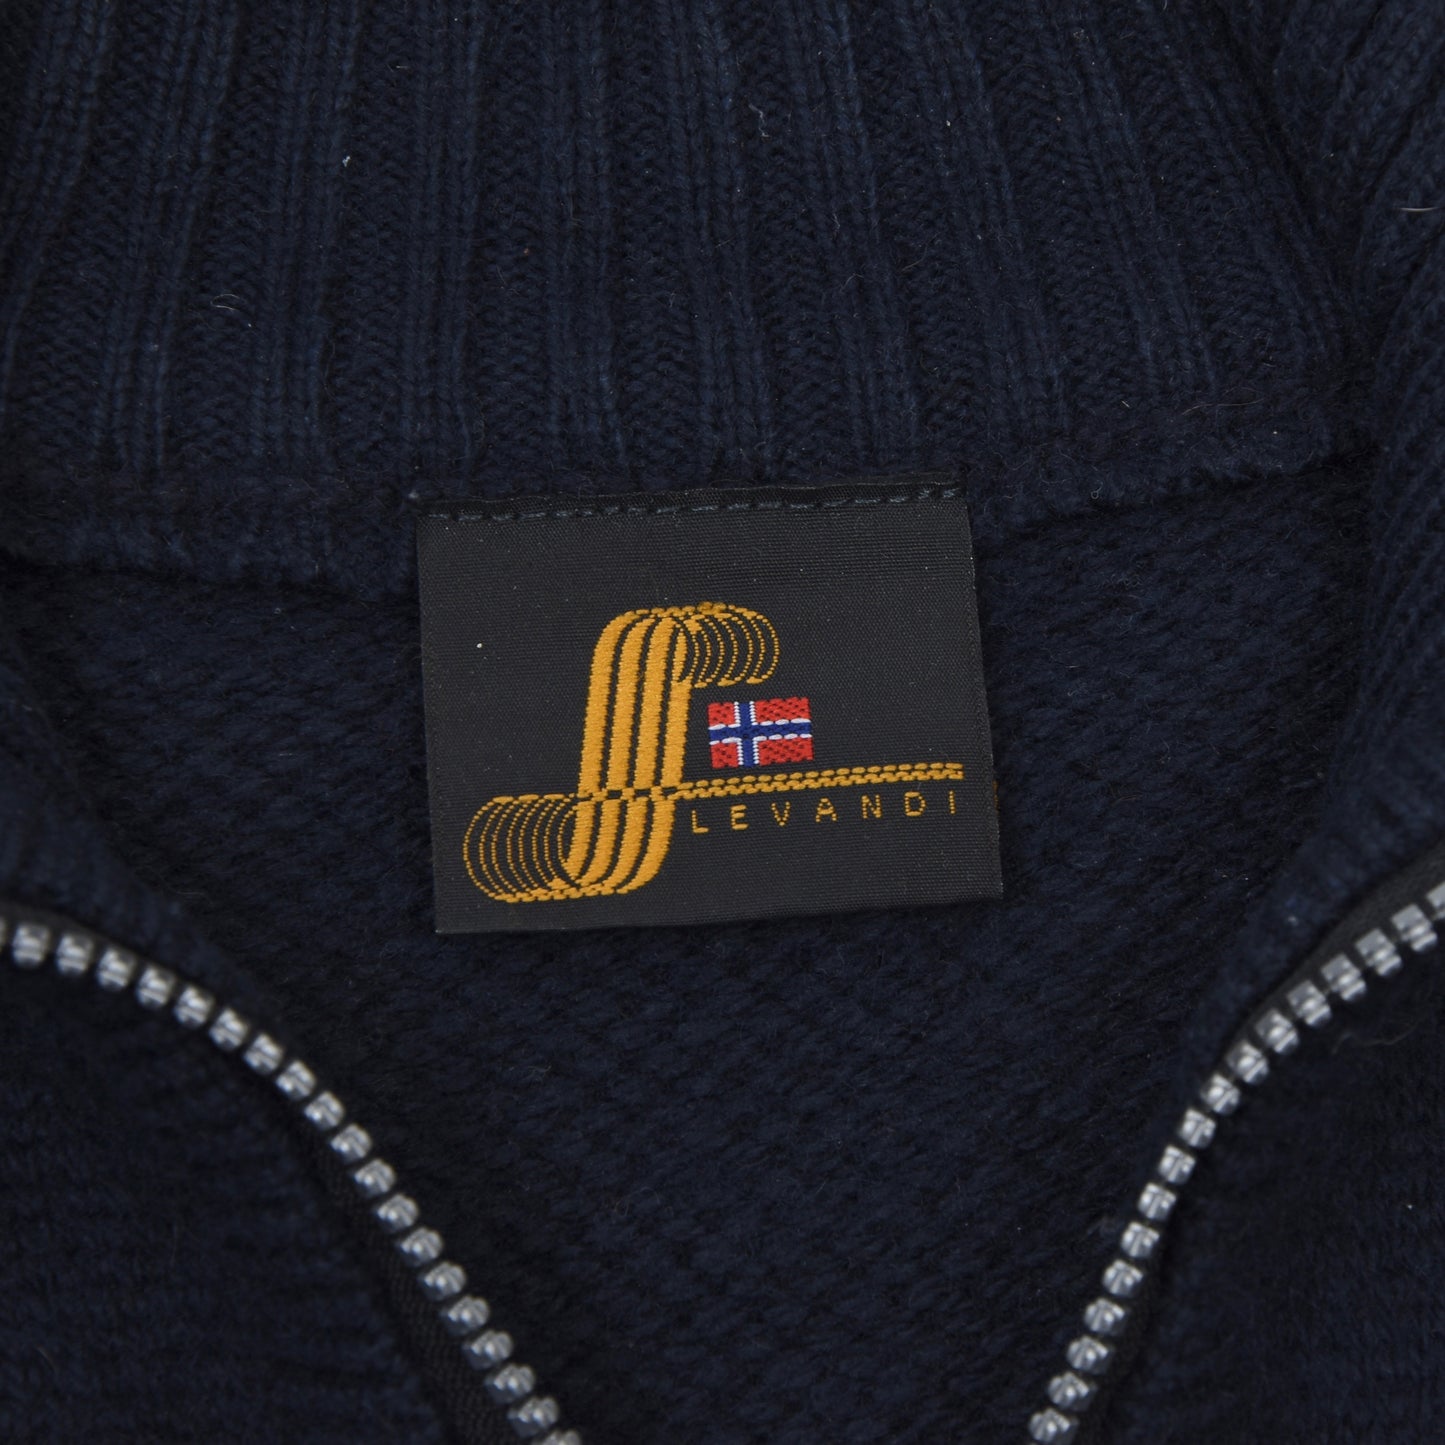 Levandi Norwegian Wool Sweater Size M